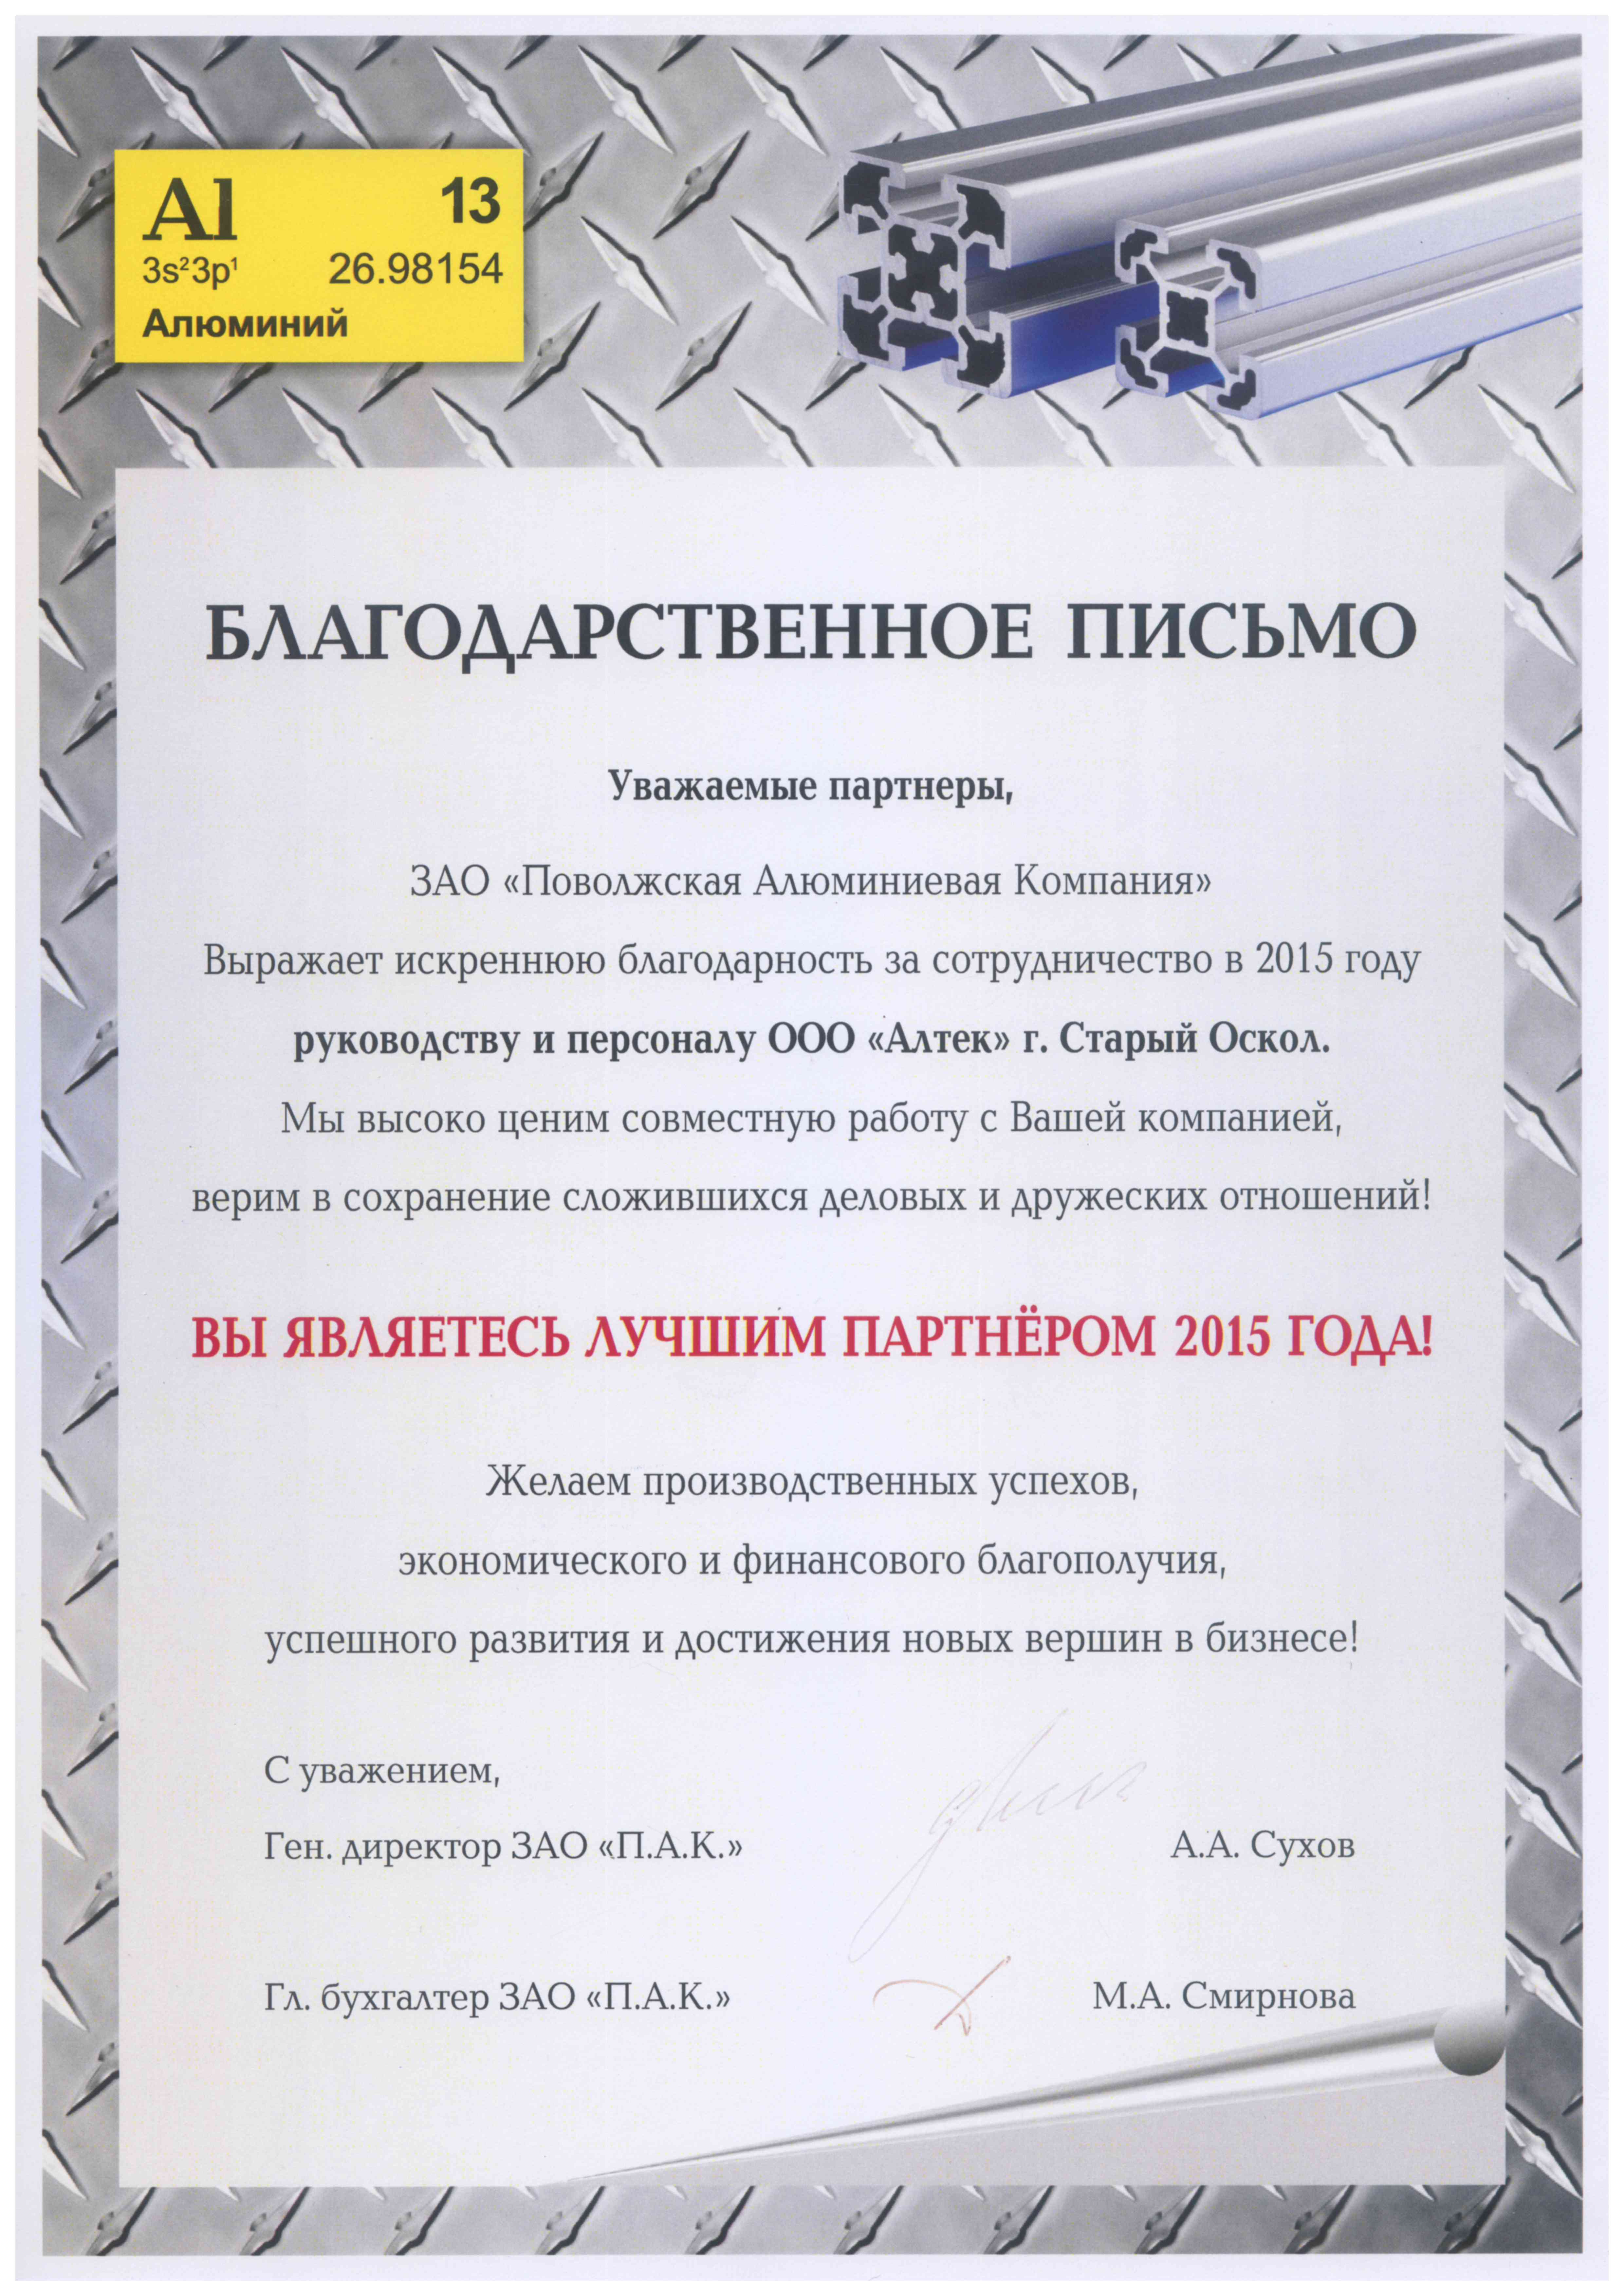 Letter of appreciation from Pavolzhskaya Aluminum Company CJSC